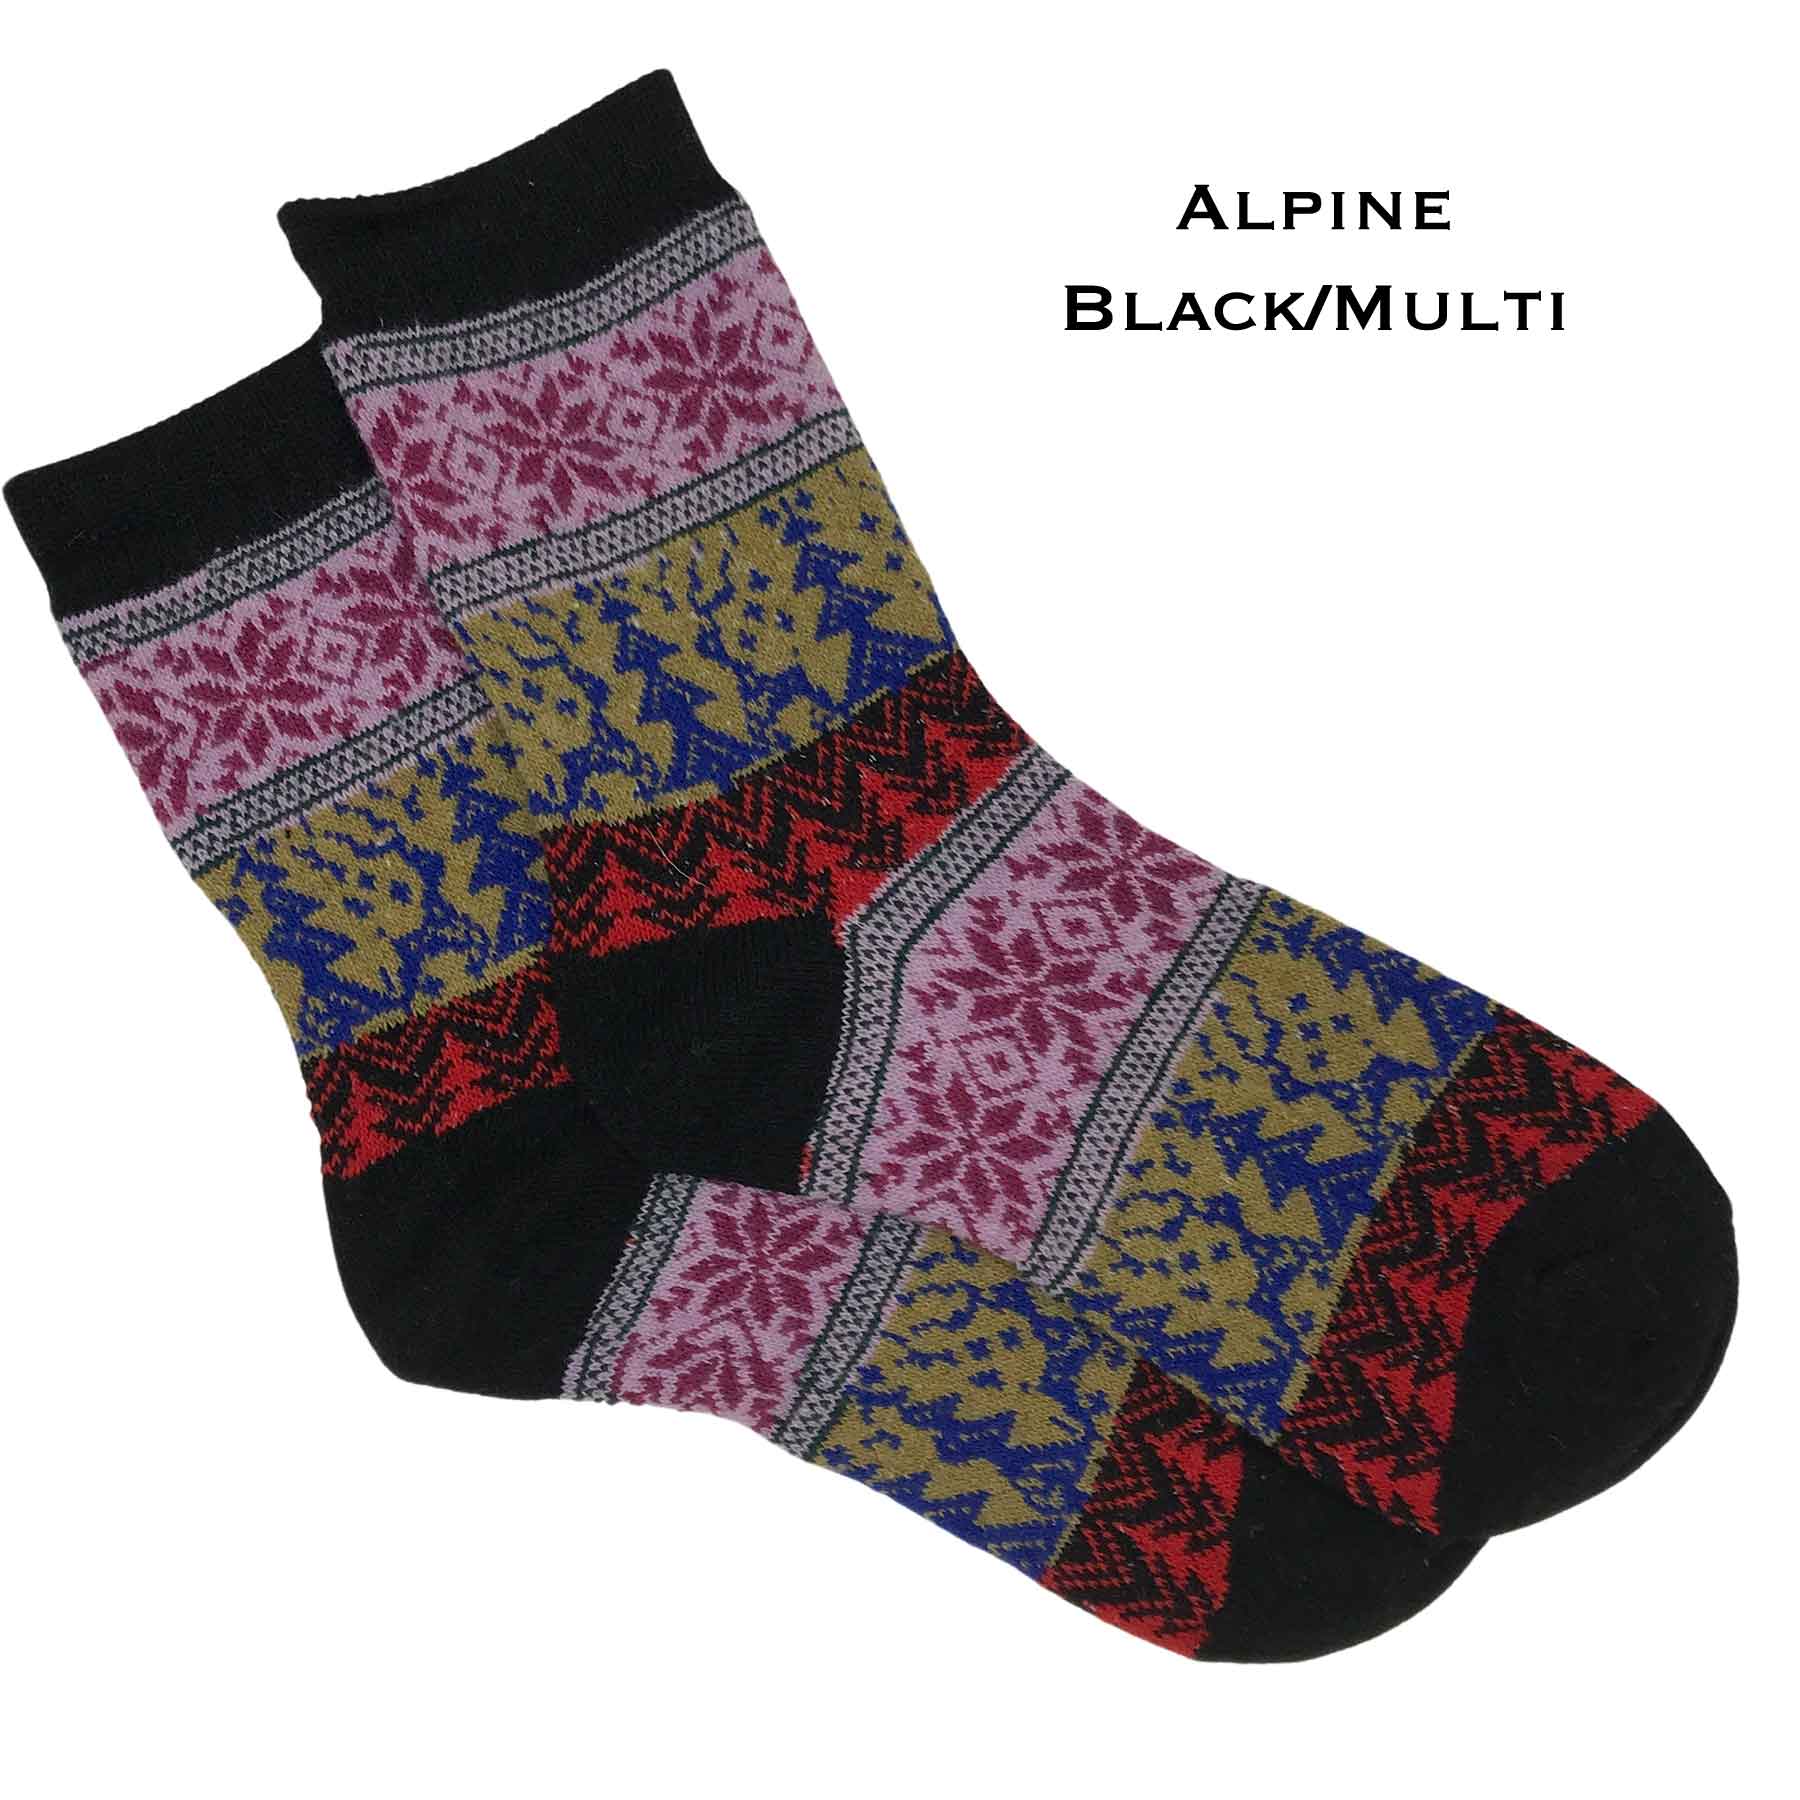 Alpine - Black/Multi